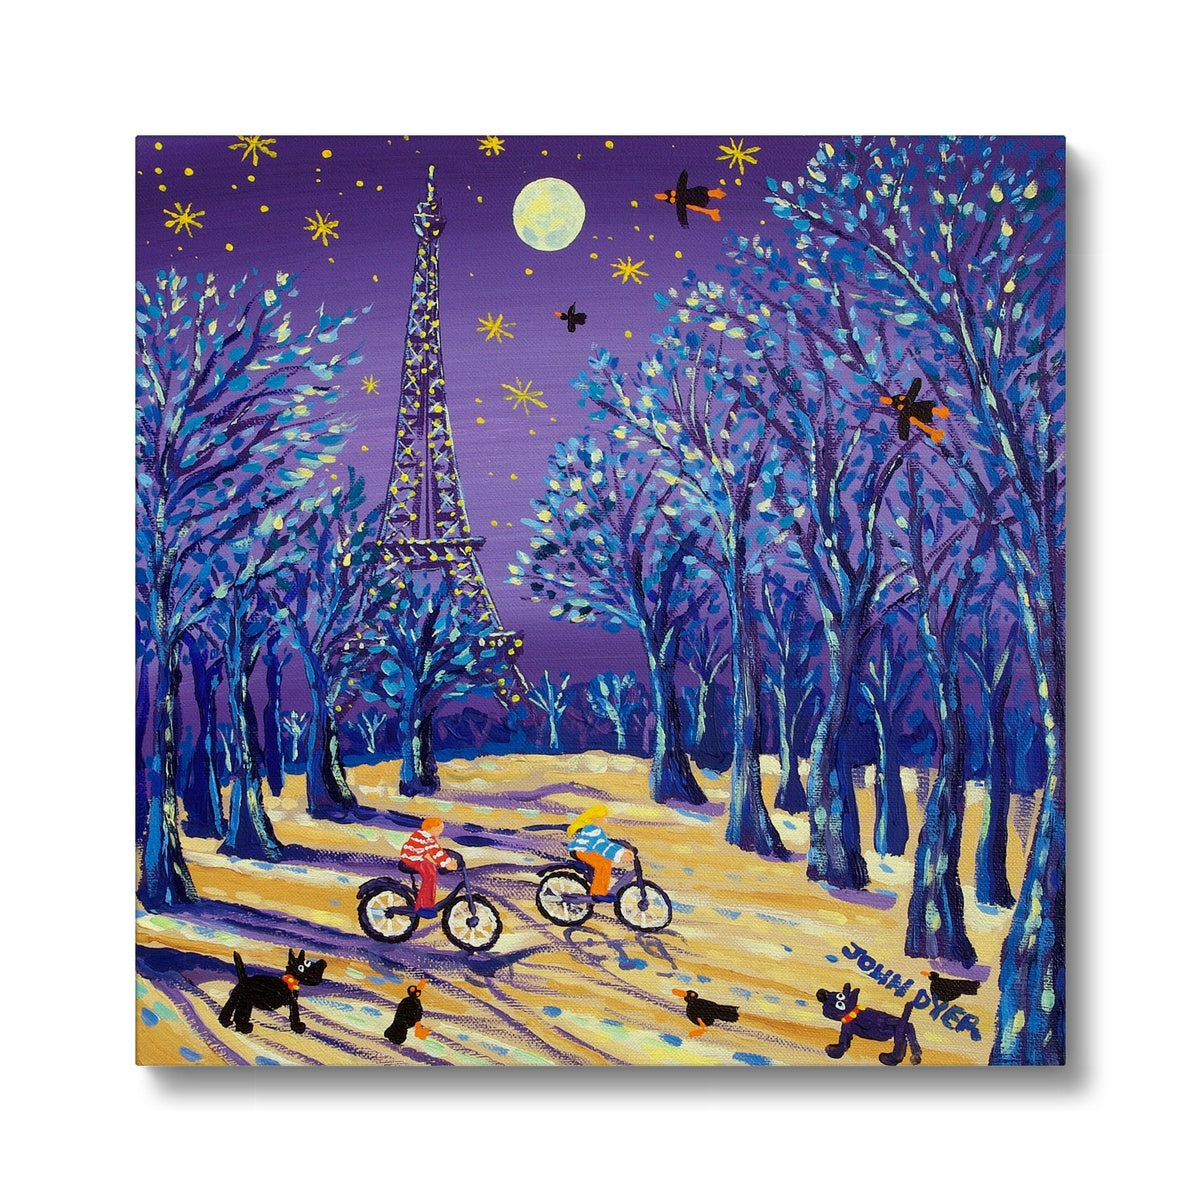 Cycling under the Moon, Eiffel Tower, Paris, France. Canvas Art Print by John Dyer